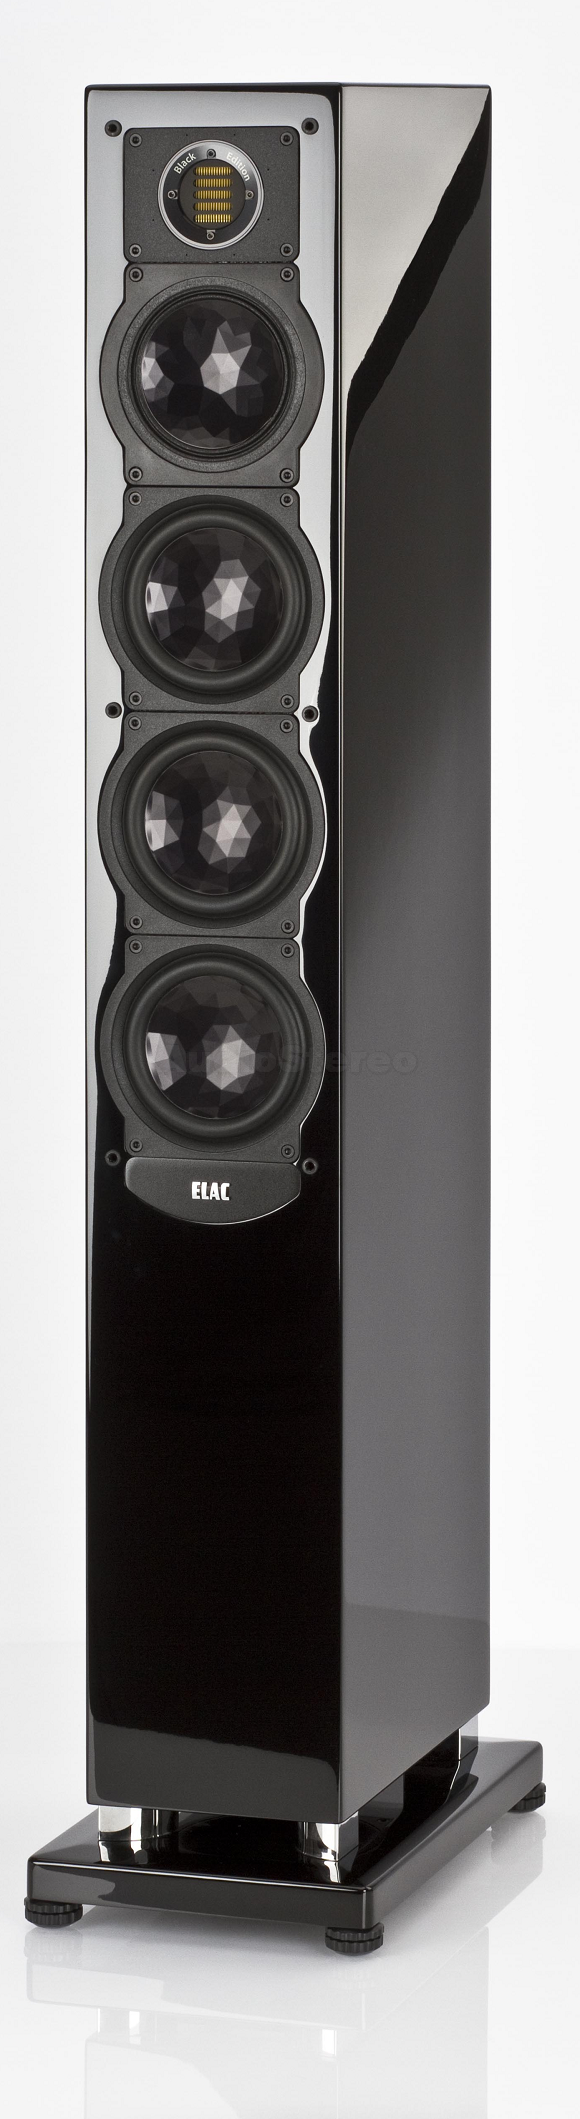 ELAC FS 248 Black Edition black high gloss finish